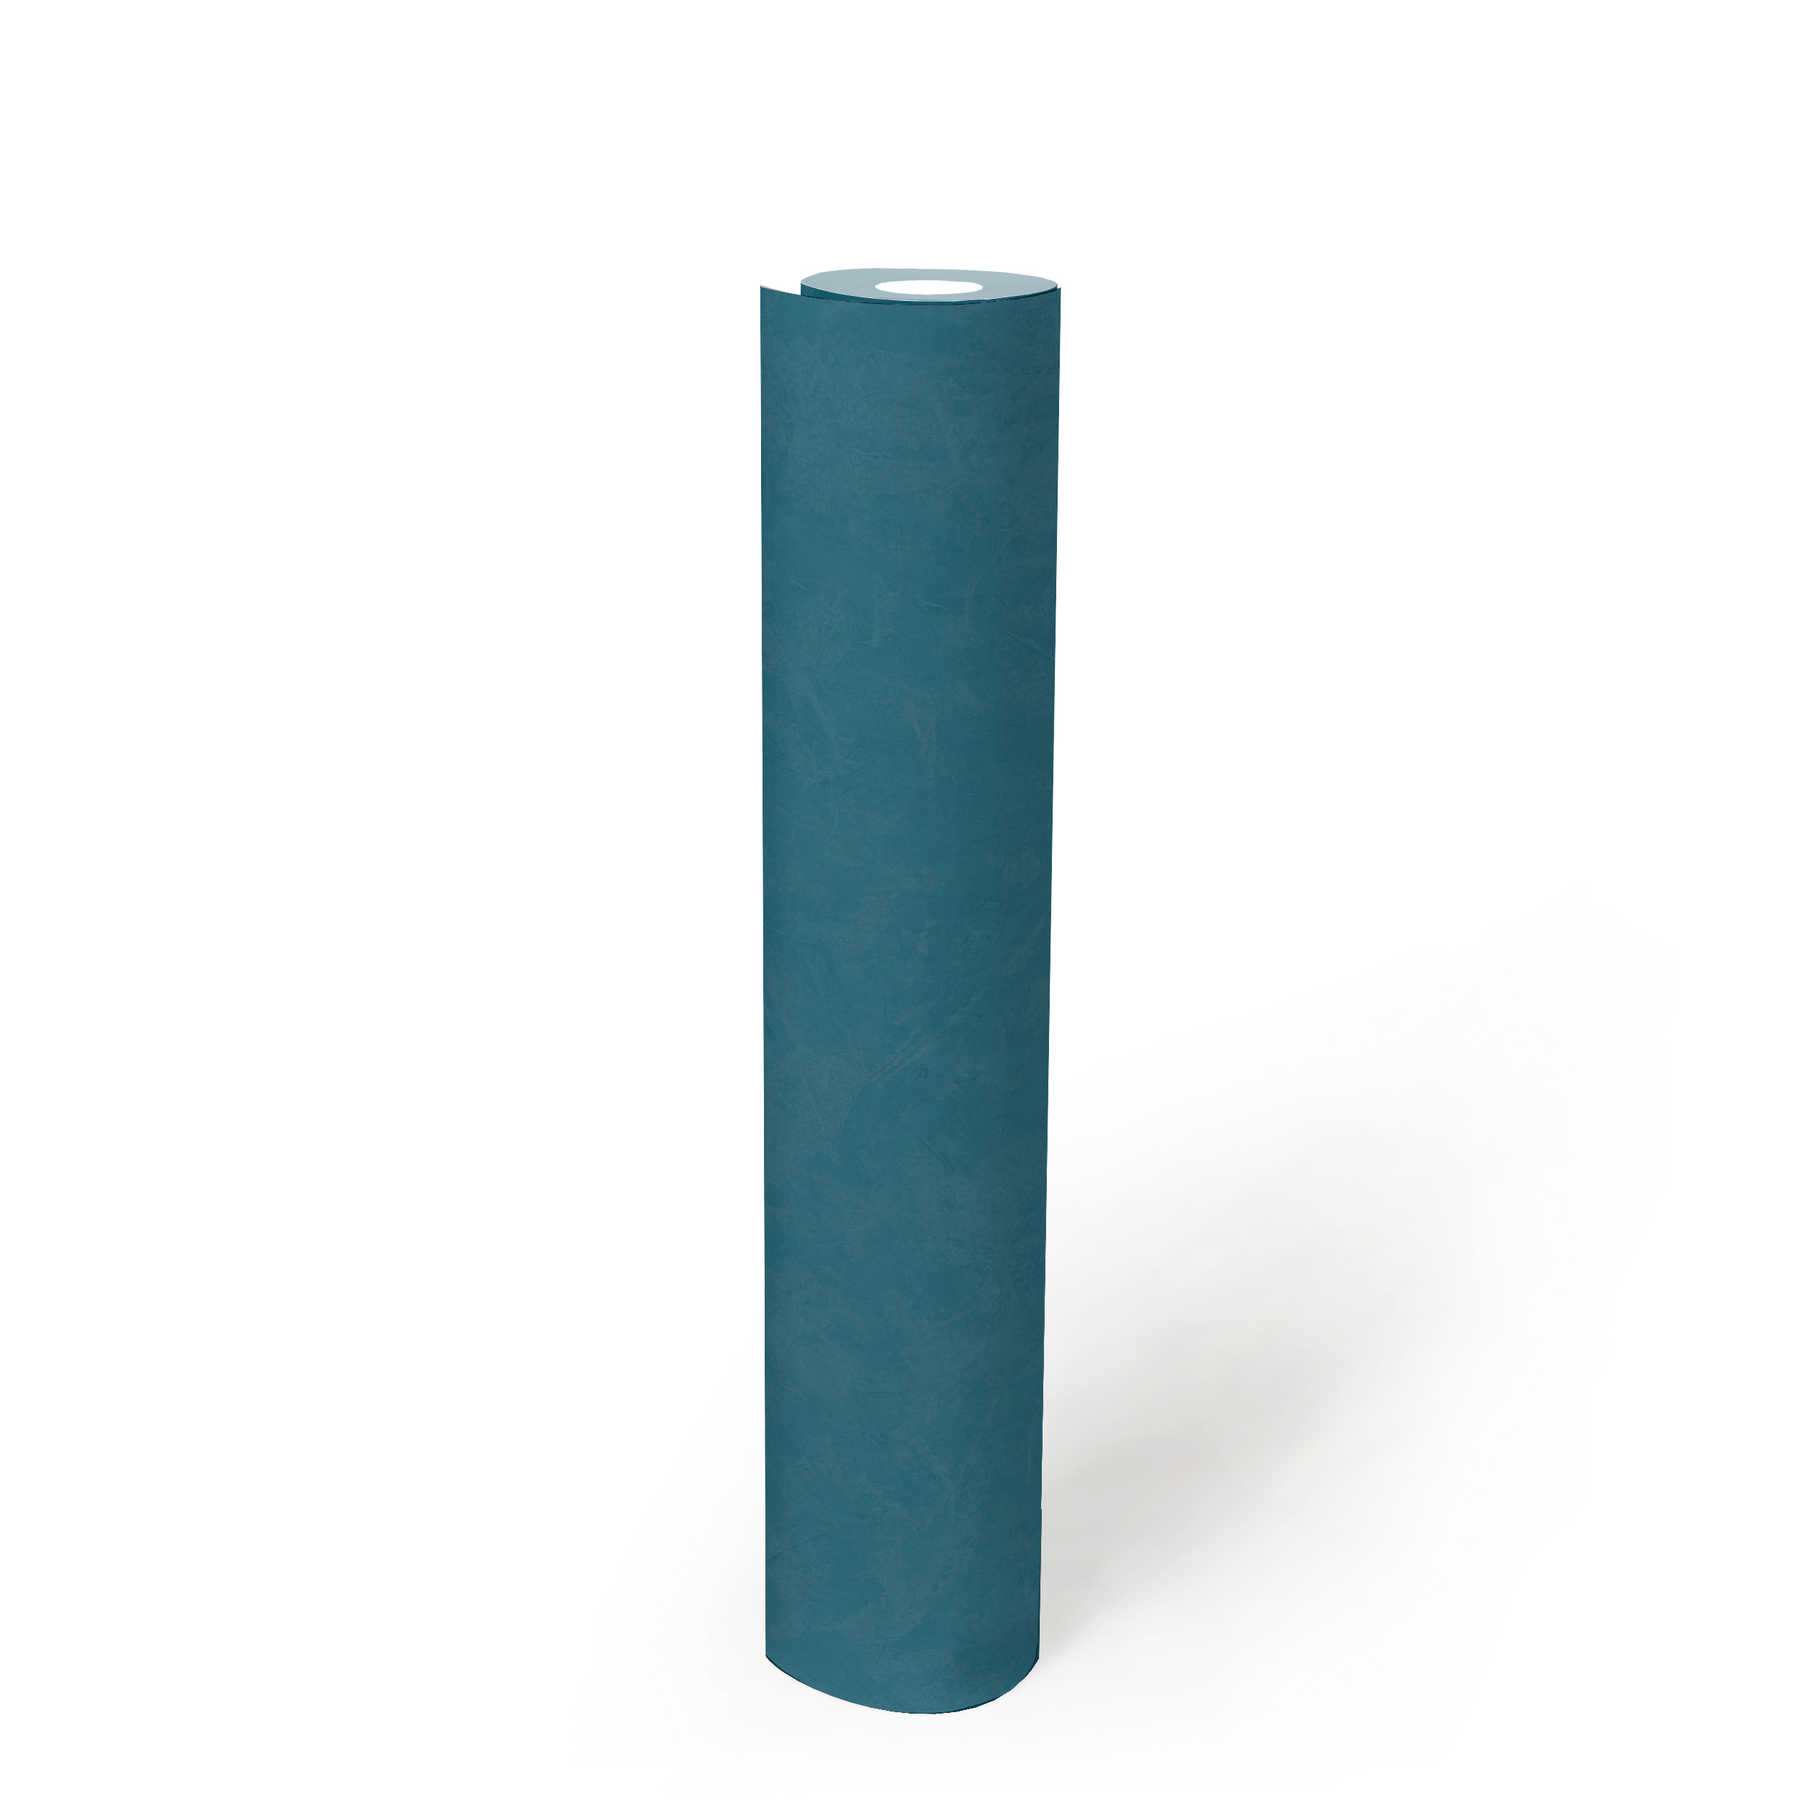             Plain non-woven wallpaper with trowel plaster look - blue, petrol
        